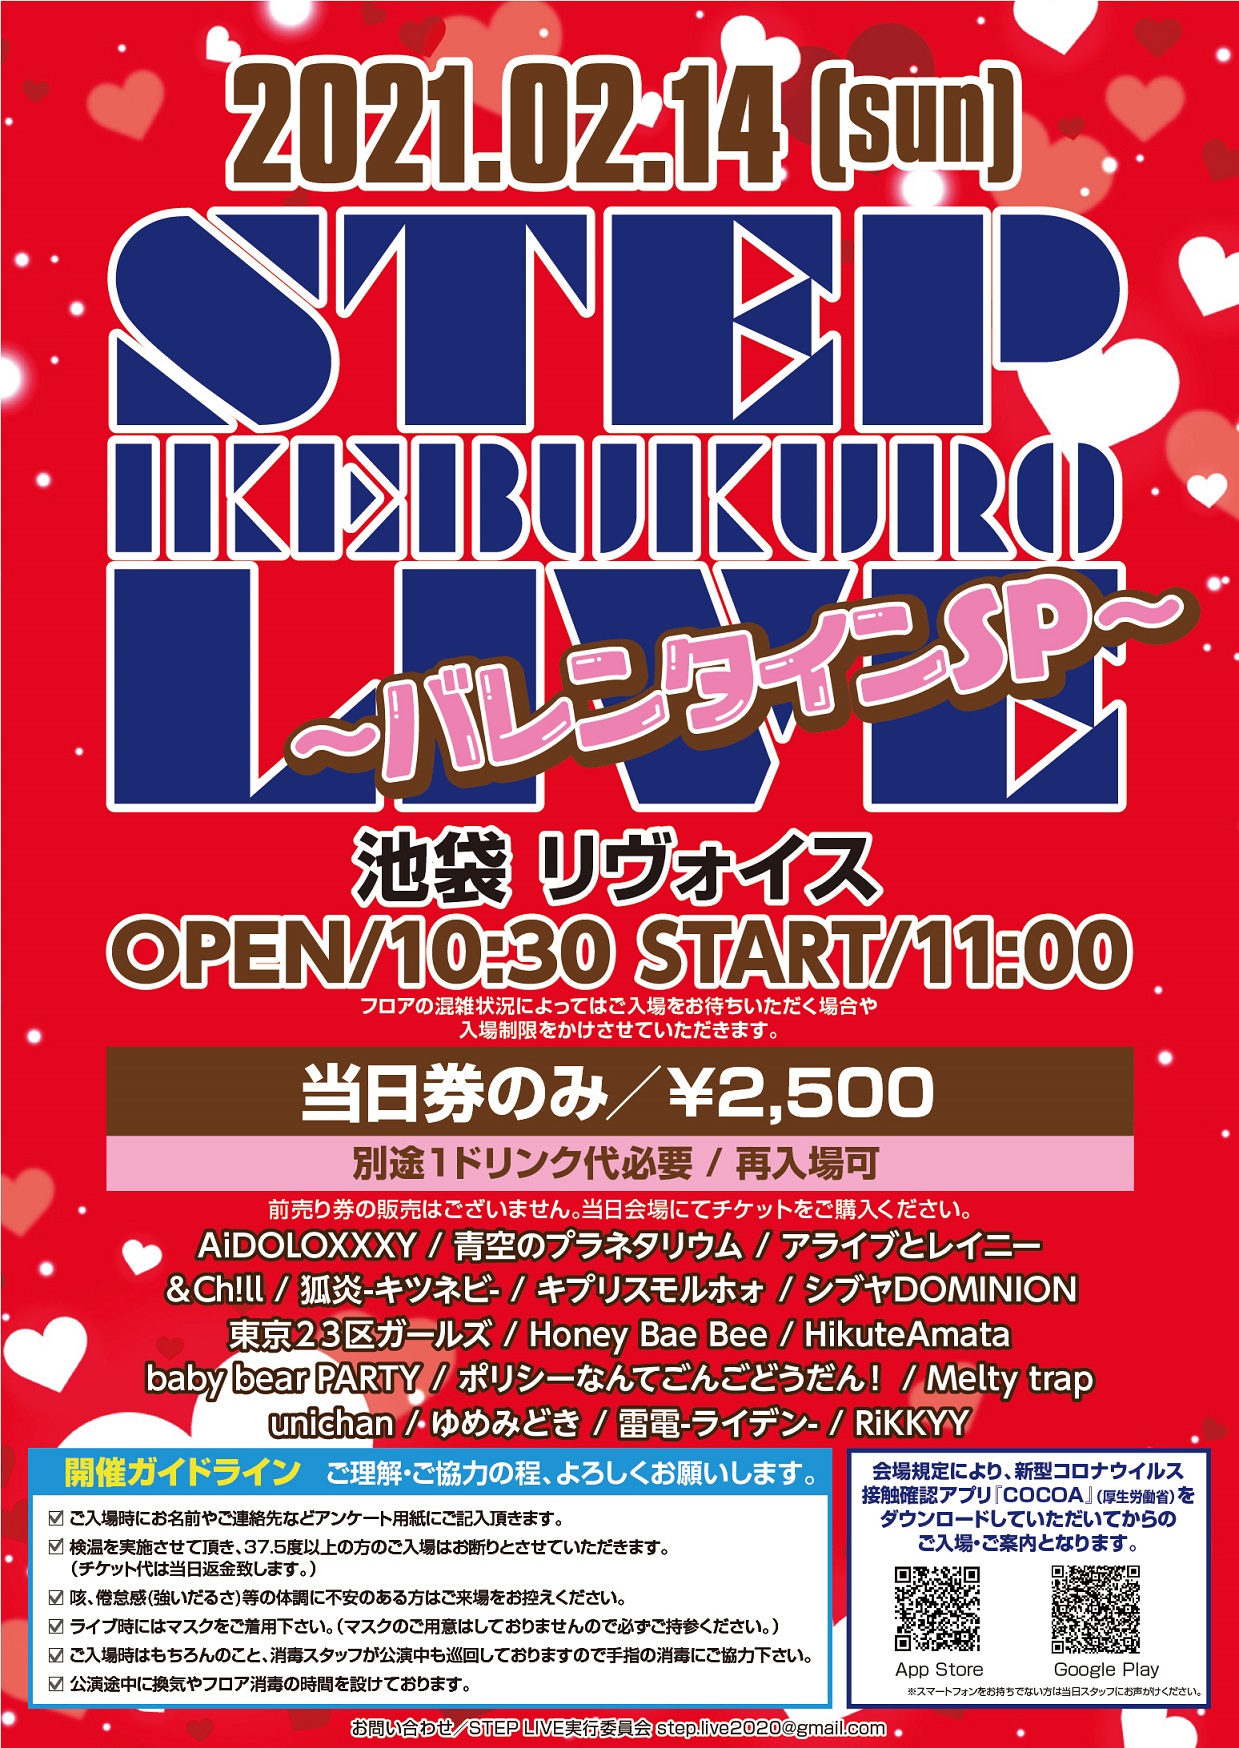 ikebukuro STEP LIVE～バレンタインSP～